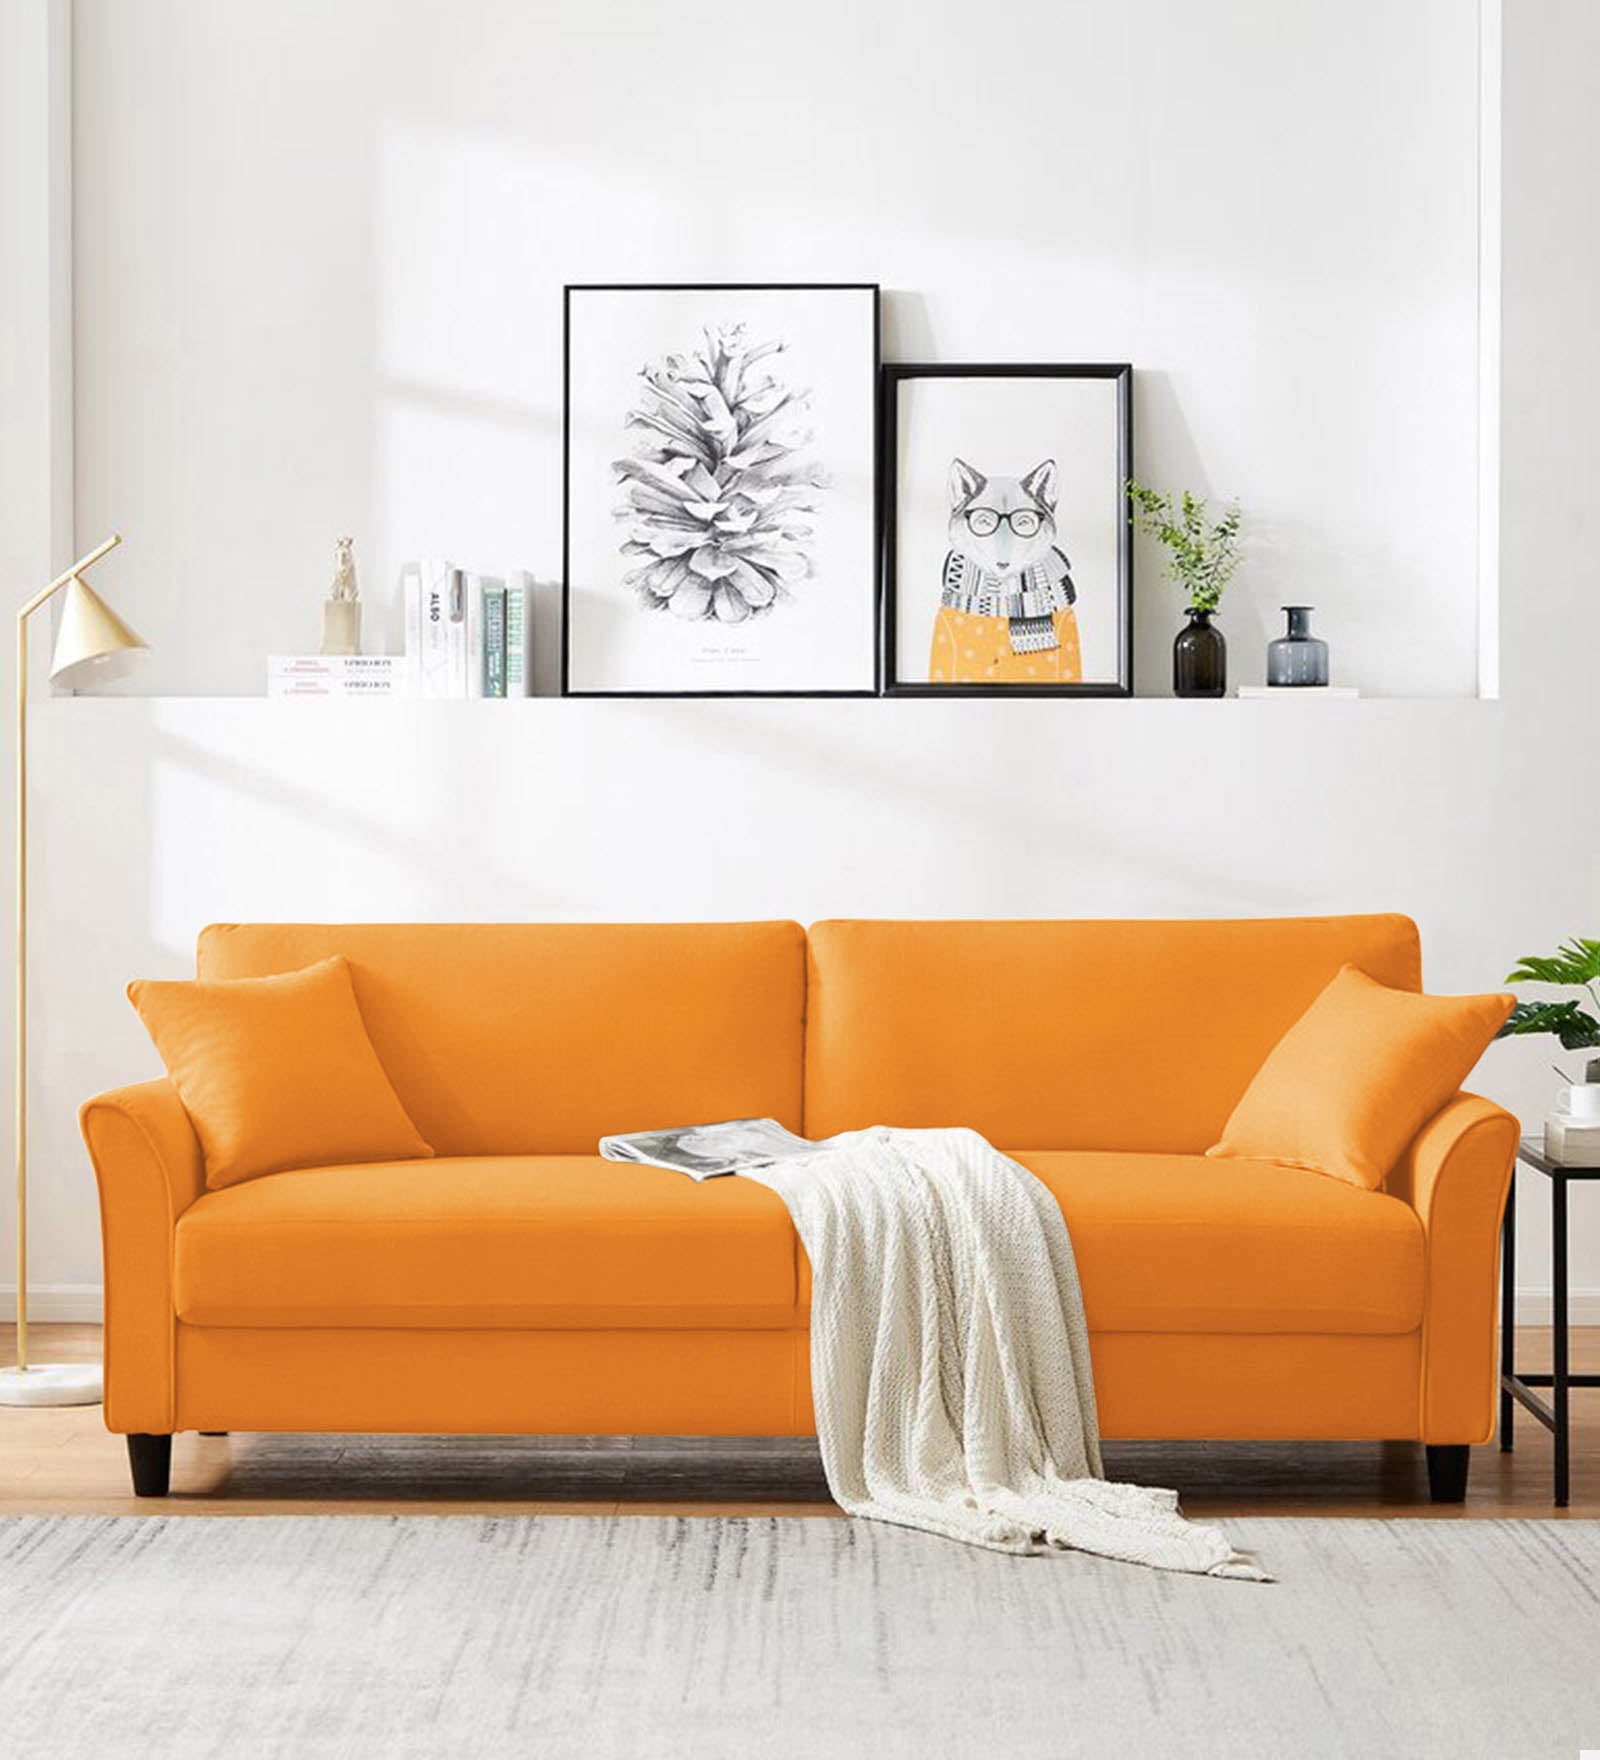 Daroo Velvet 3 Seater Sofa in Tangerine orange Colour